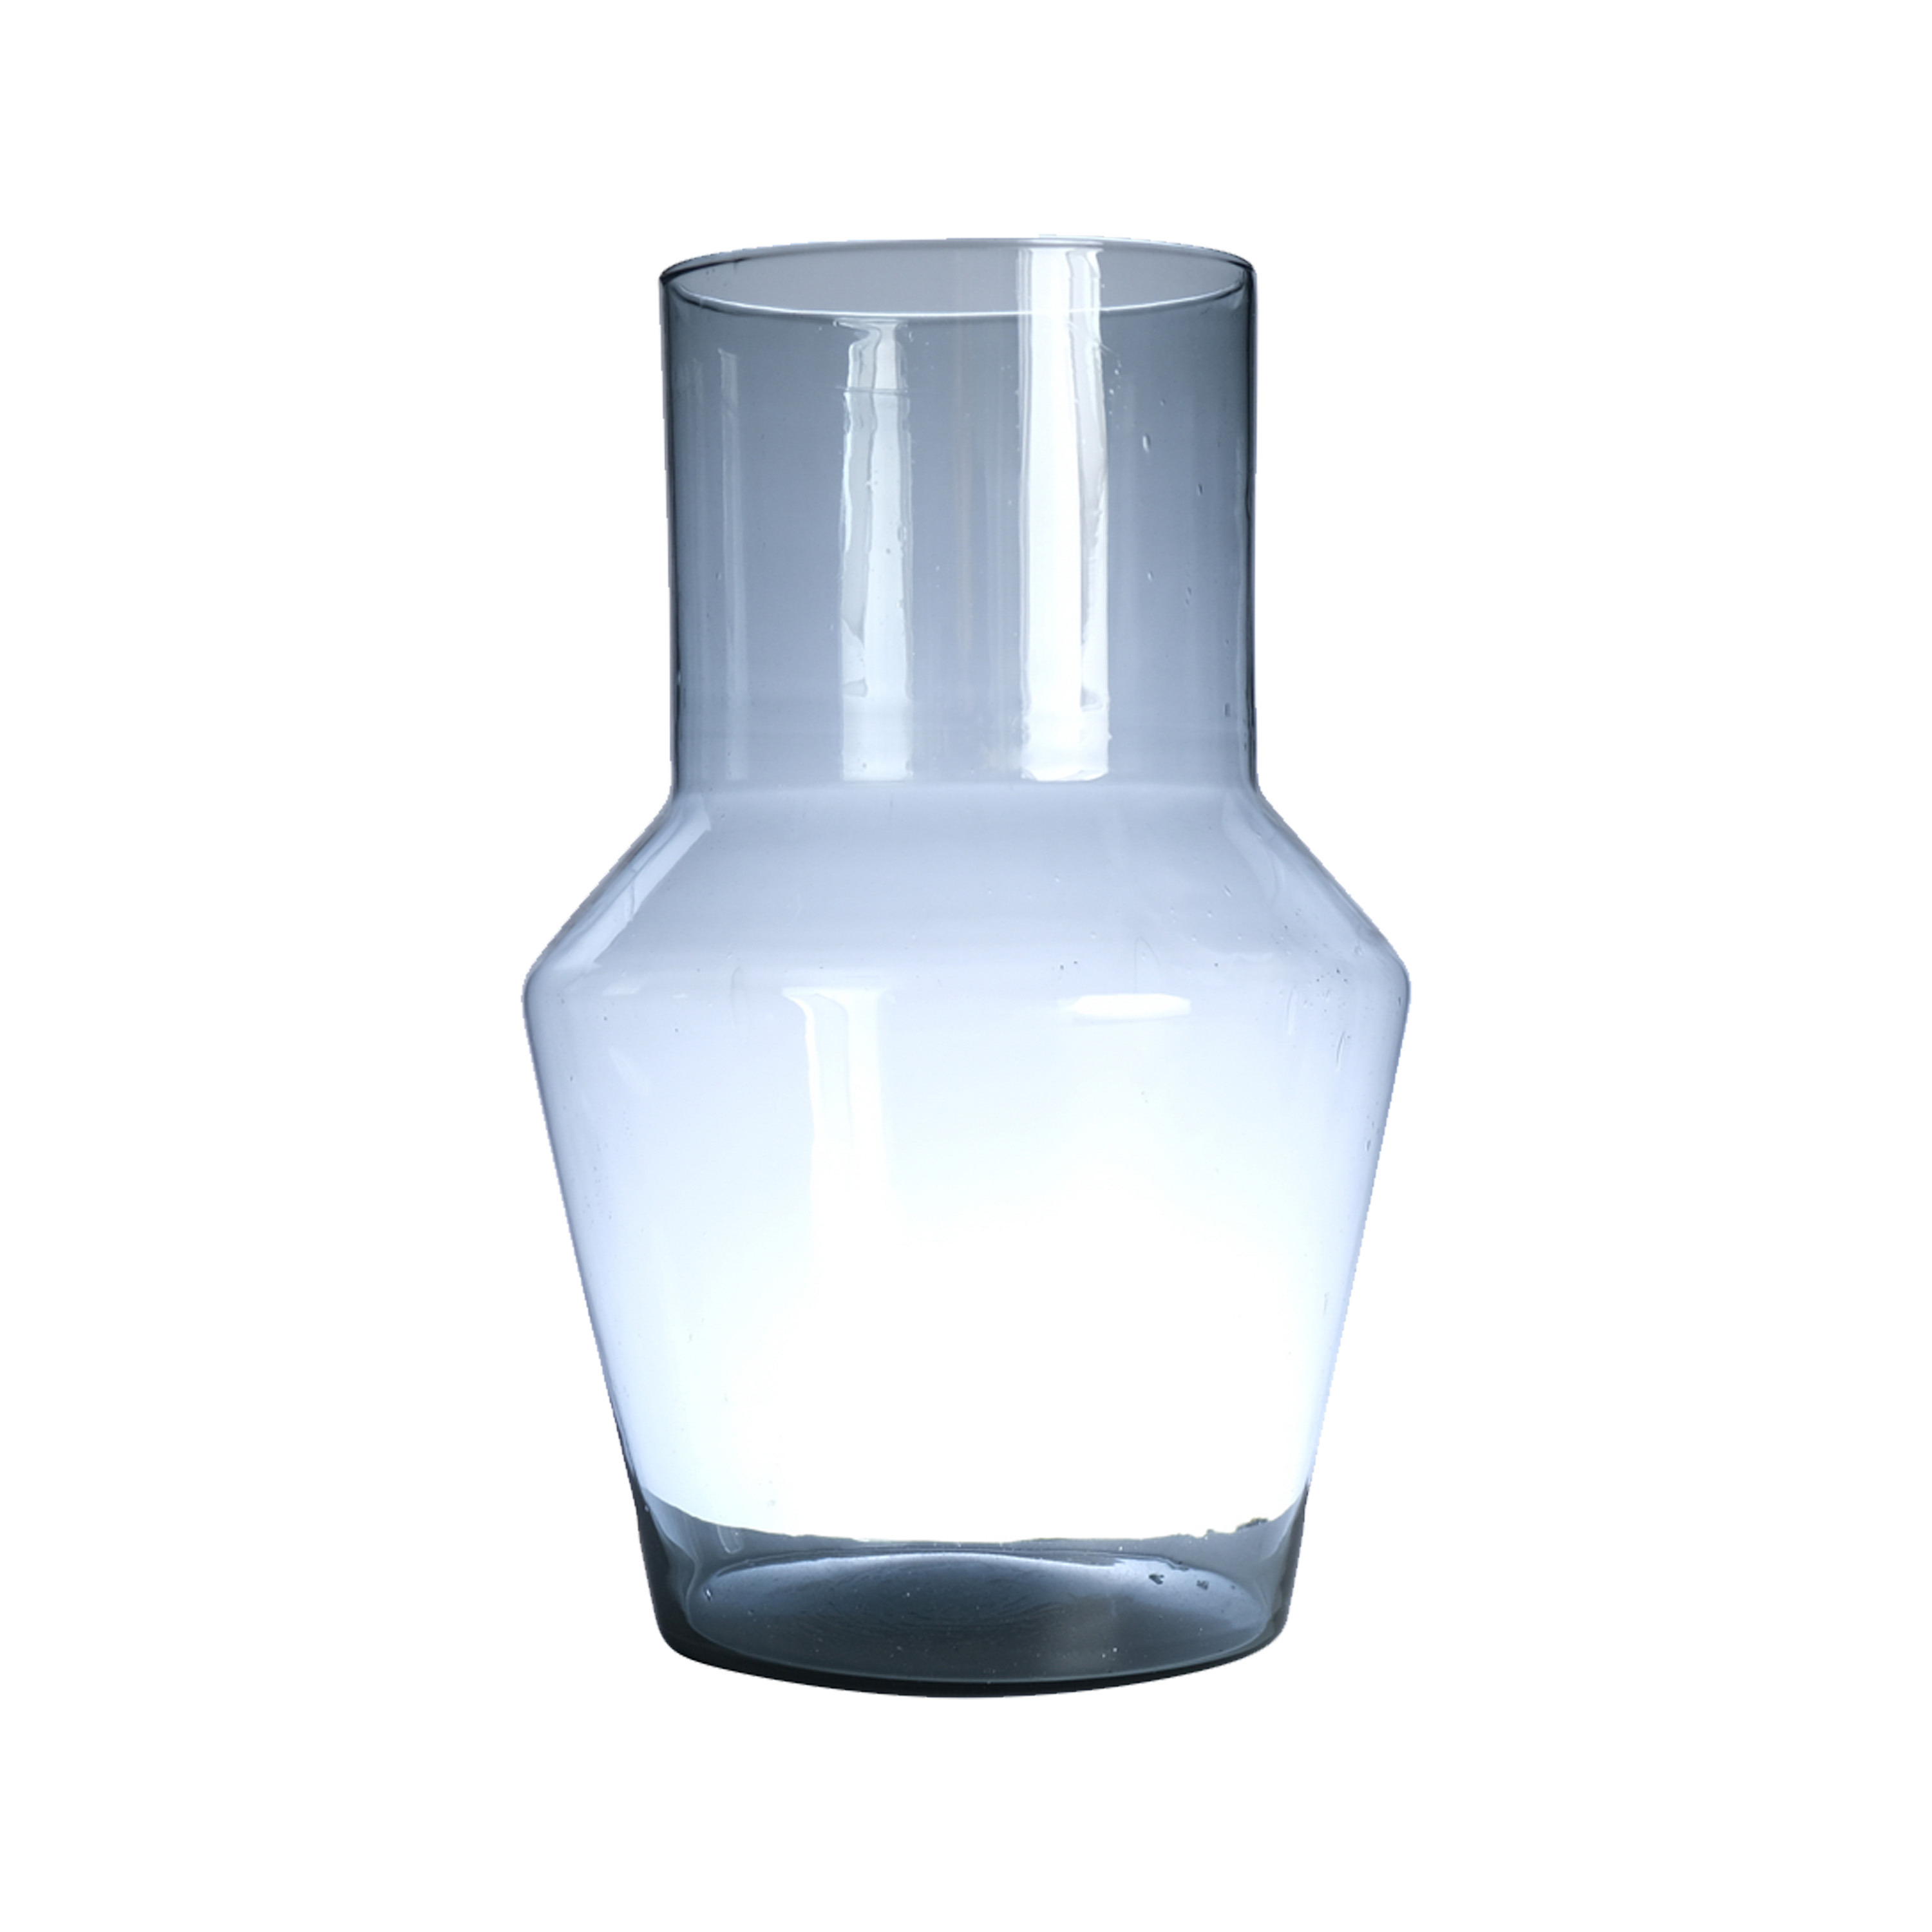 Hakbijl Glass Bloemenvaas Evie - transparant - eco glas - D23 x H35 cm - hoekige vaas -